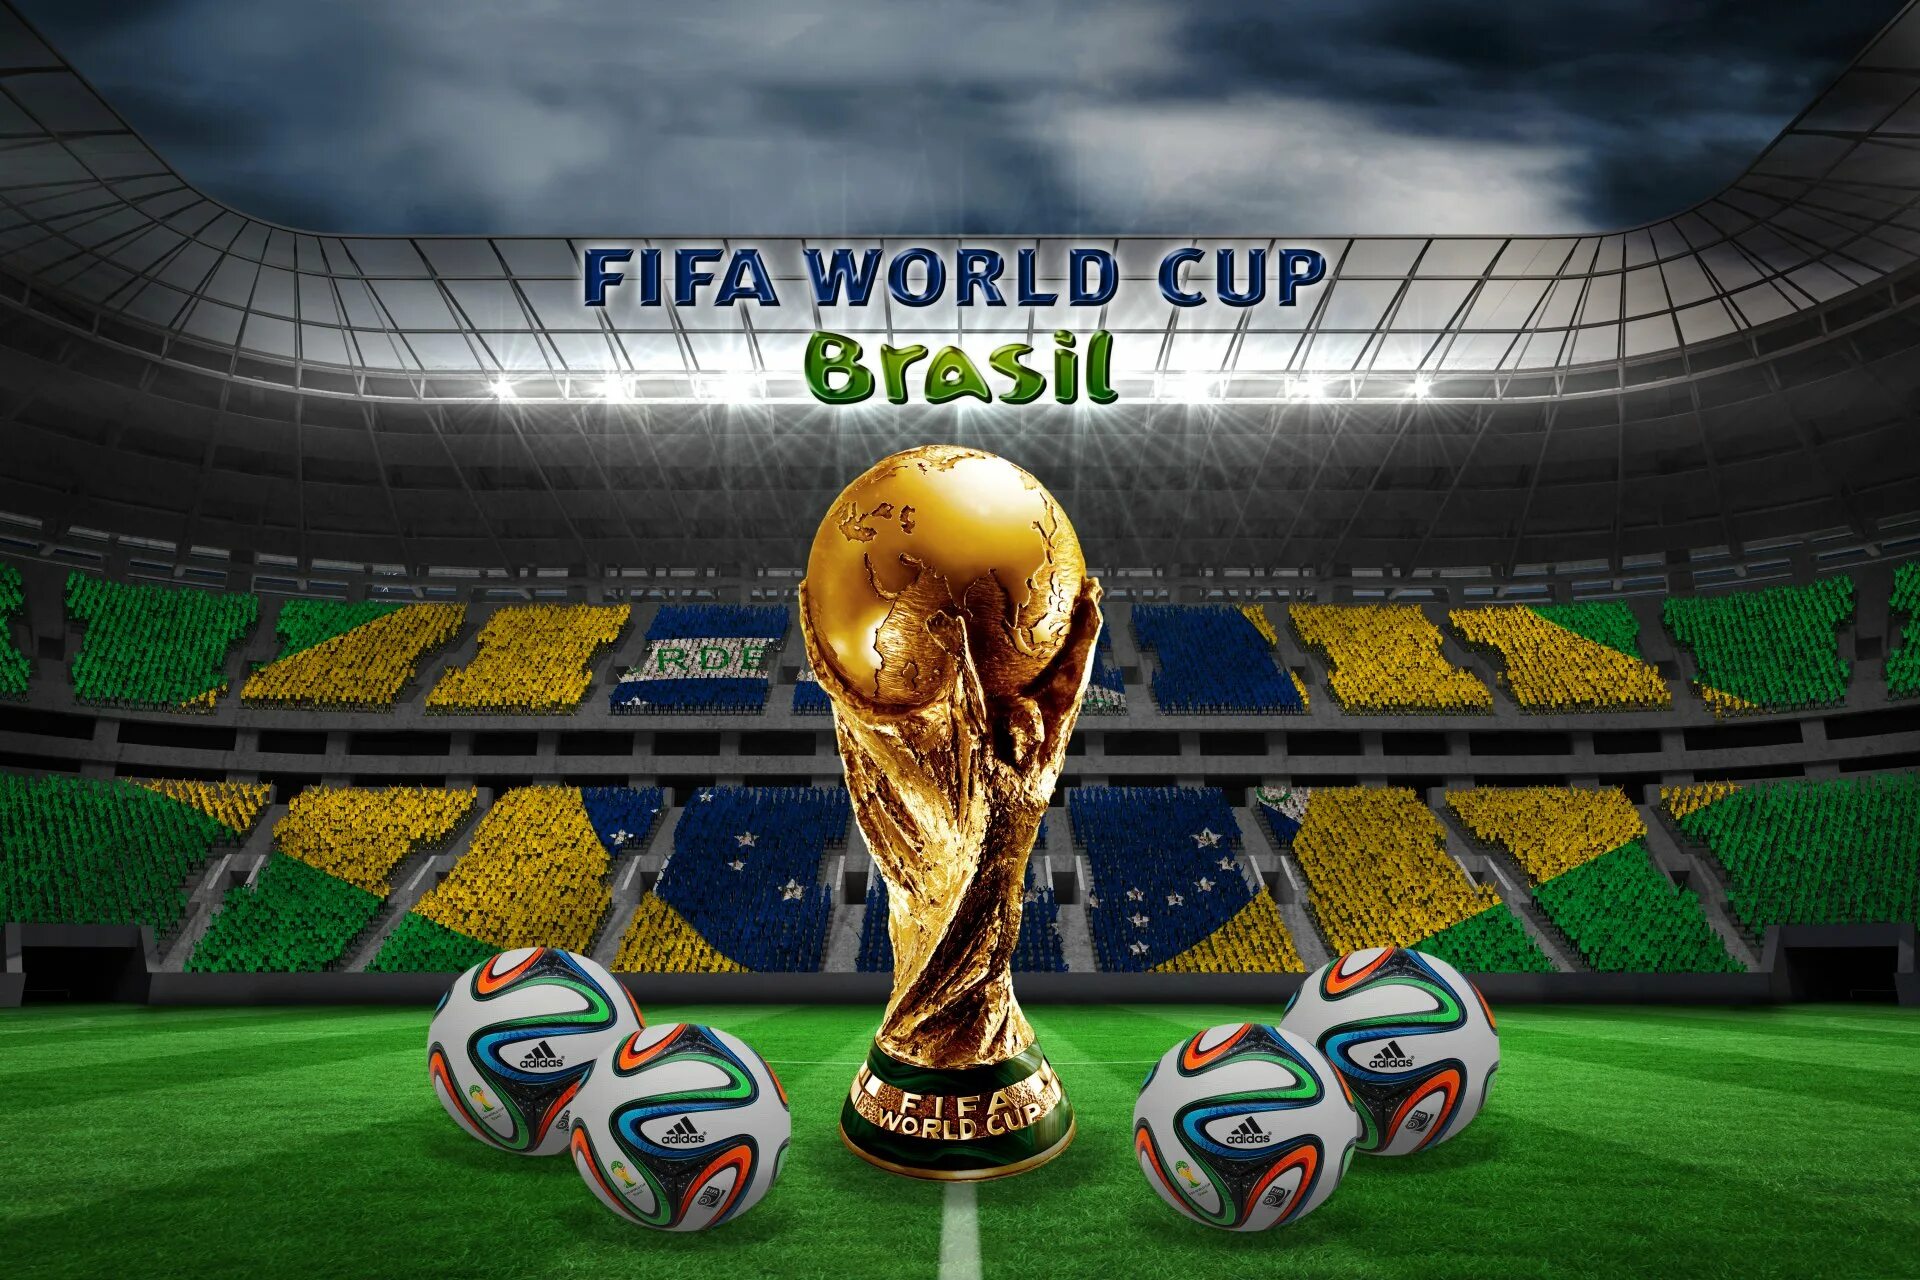 World s cup. ФИФА 2014 Бразилия. Кубок ФИФА ворлд кап. The World Cup 2014 Brazil мяч. FIFA World Cup Brasil 2014 Brazuka.